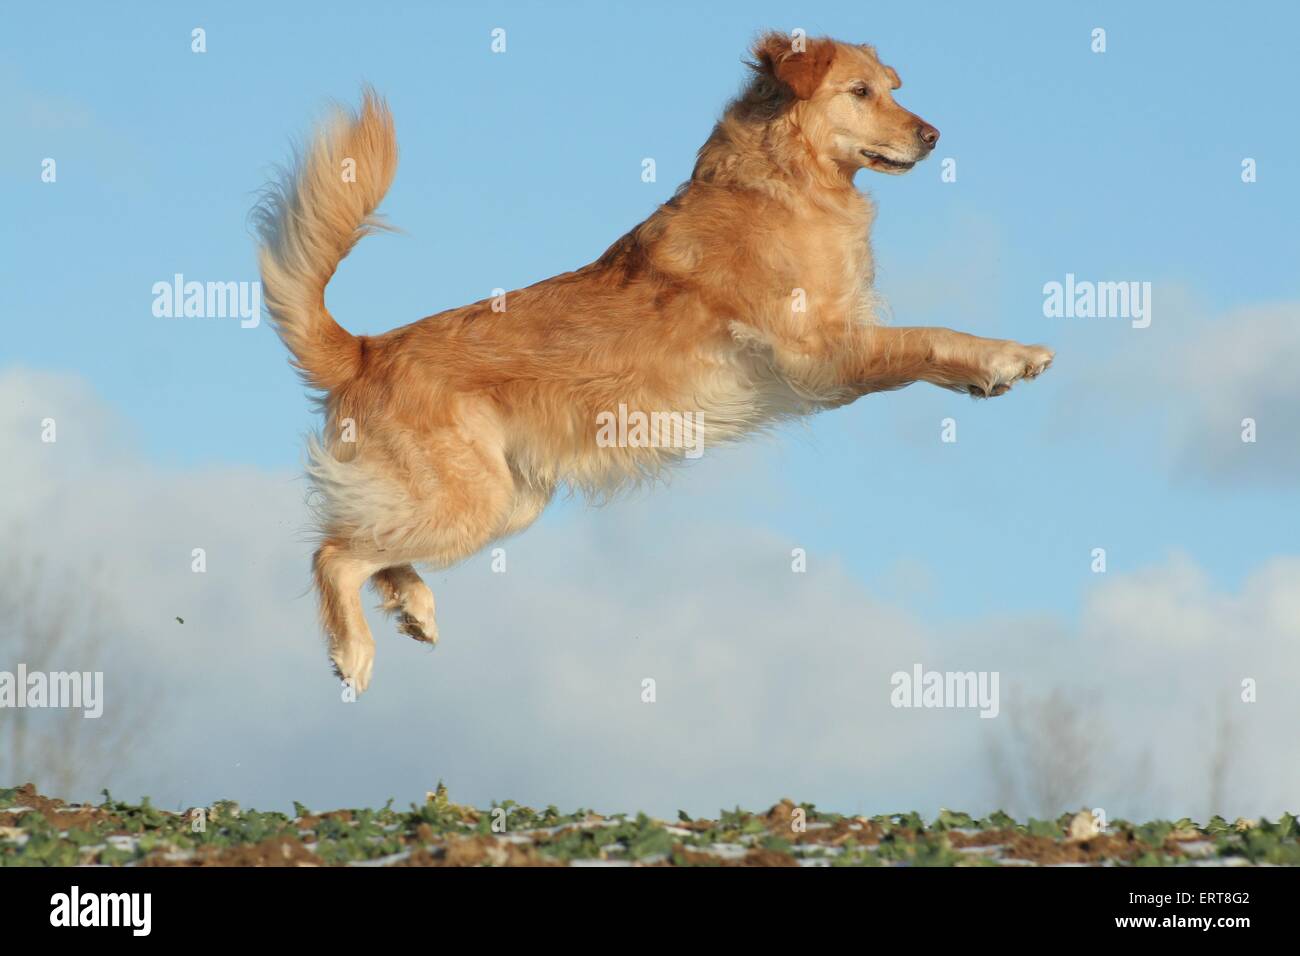 jumping Golden Retriever Stock Photo 